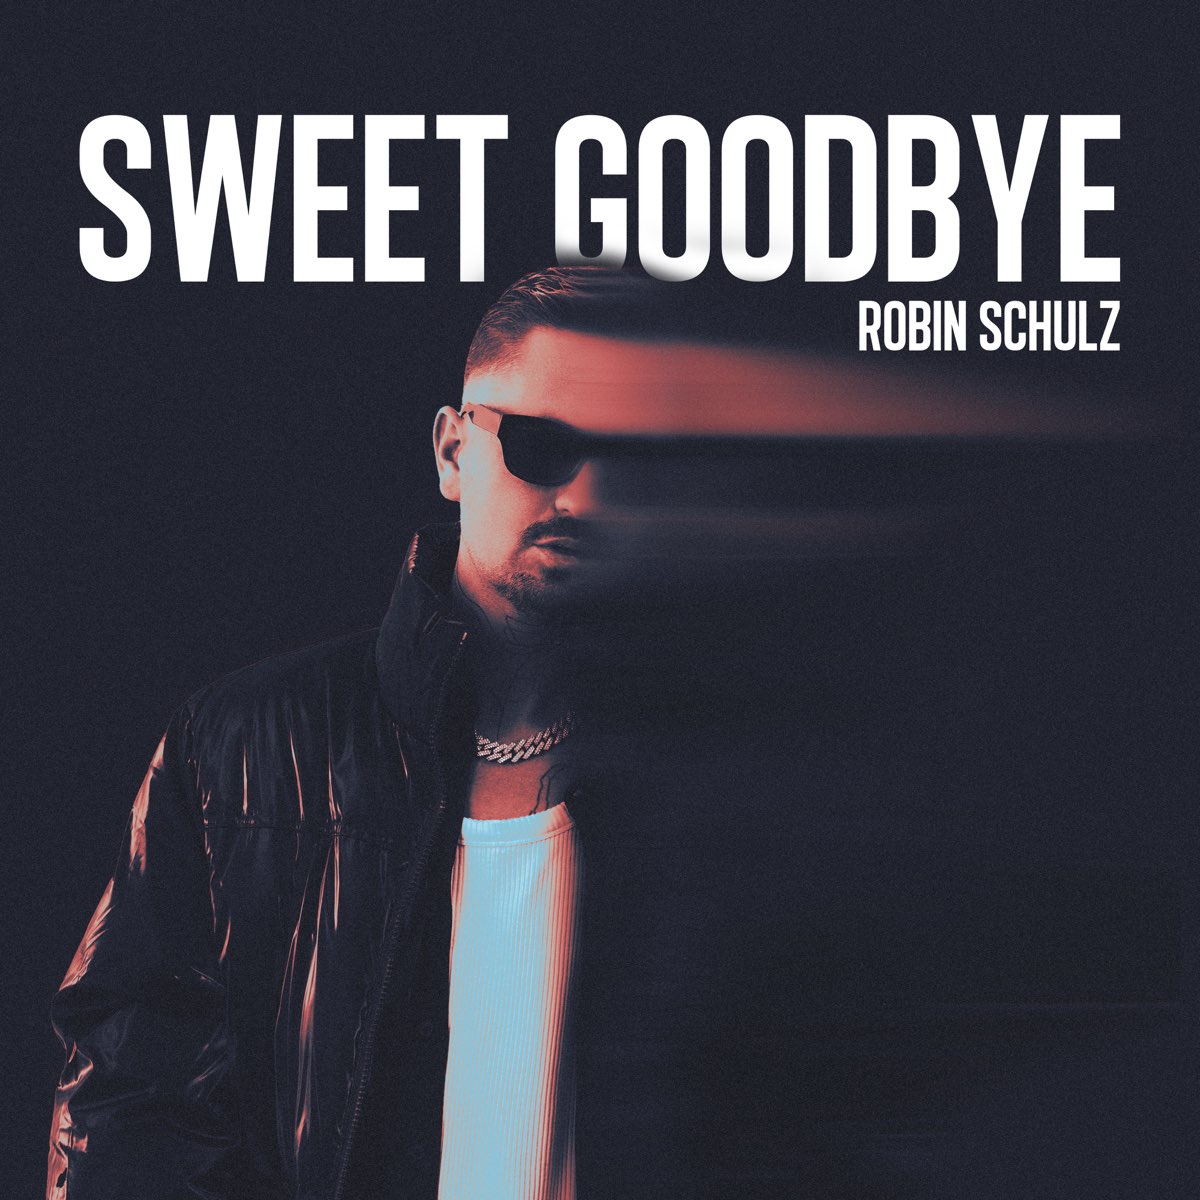 Sweet Goodbye - Single by Robin Schulz on Apple Music